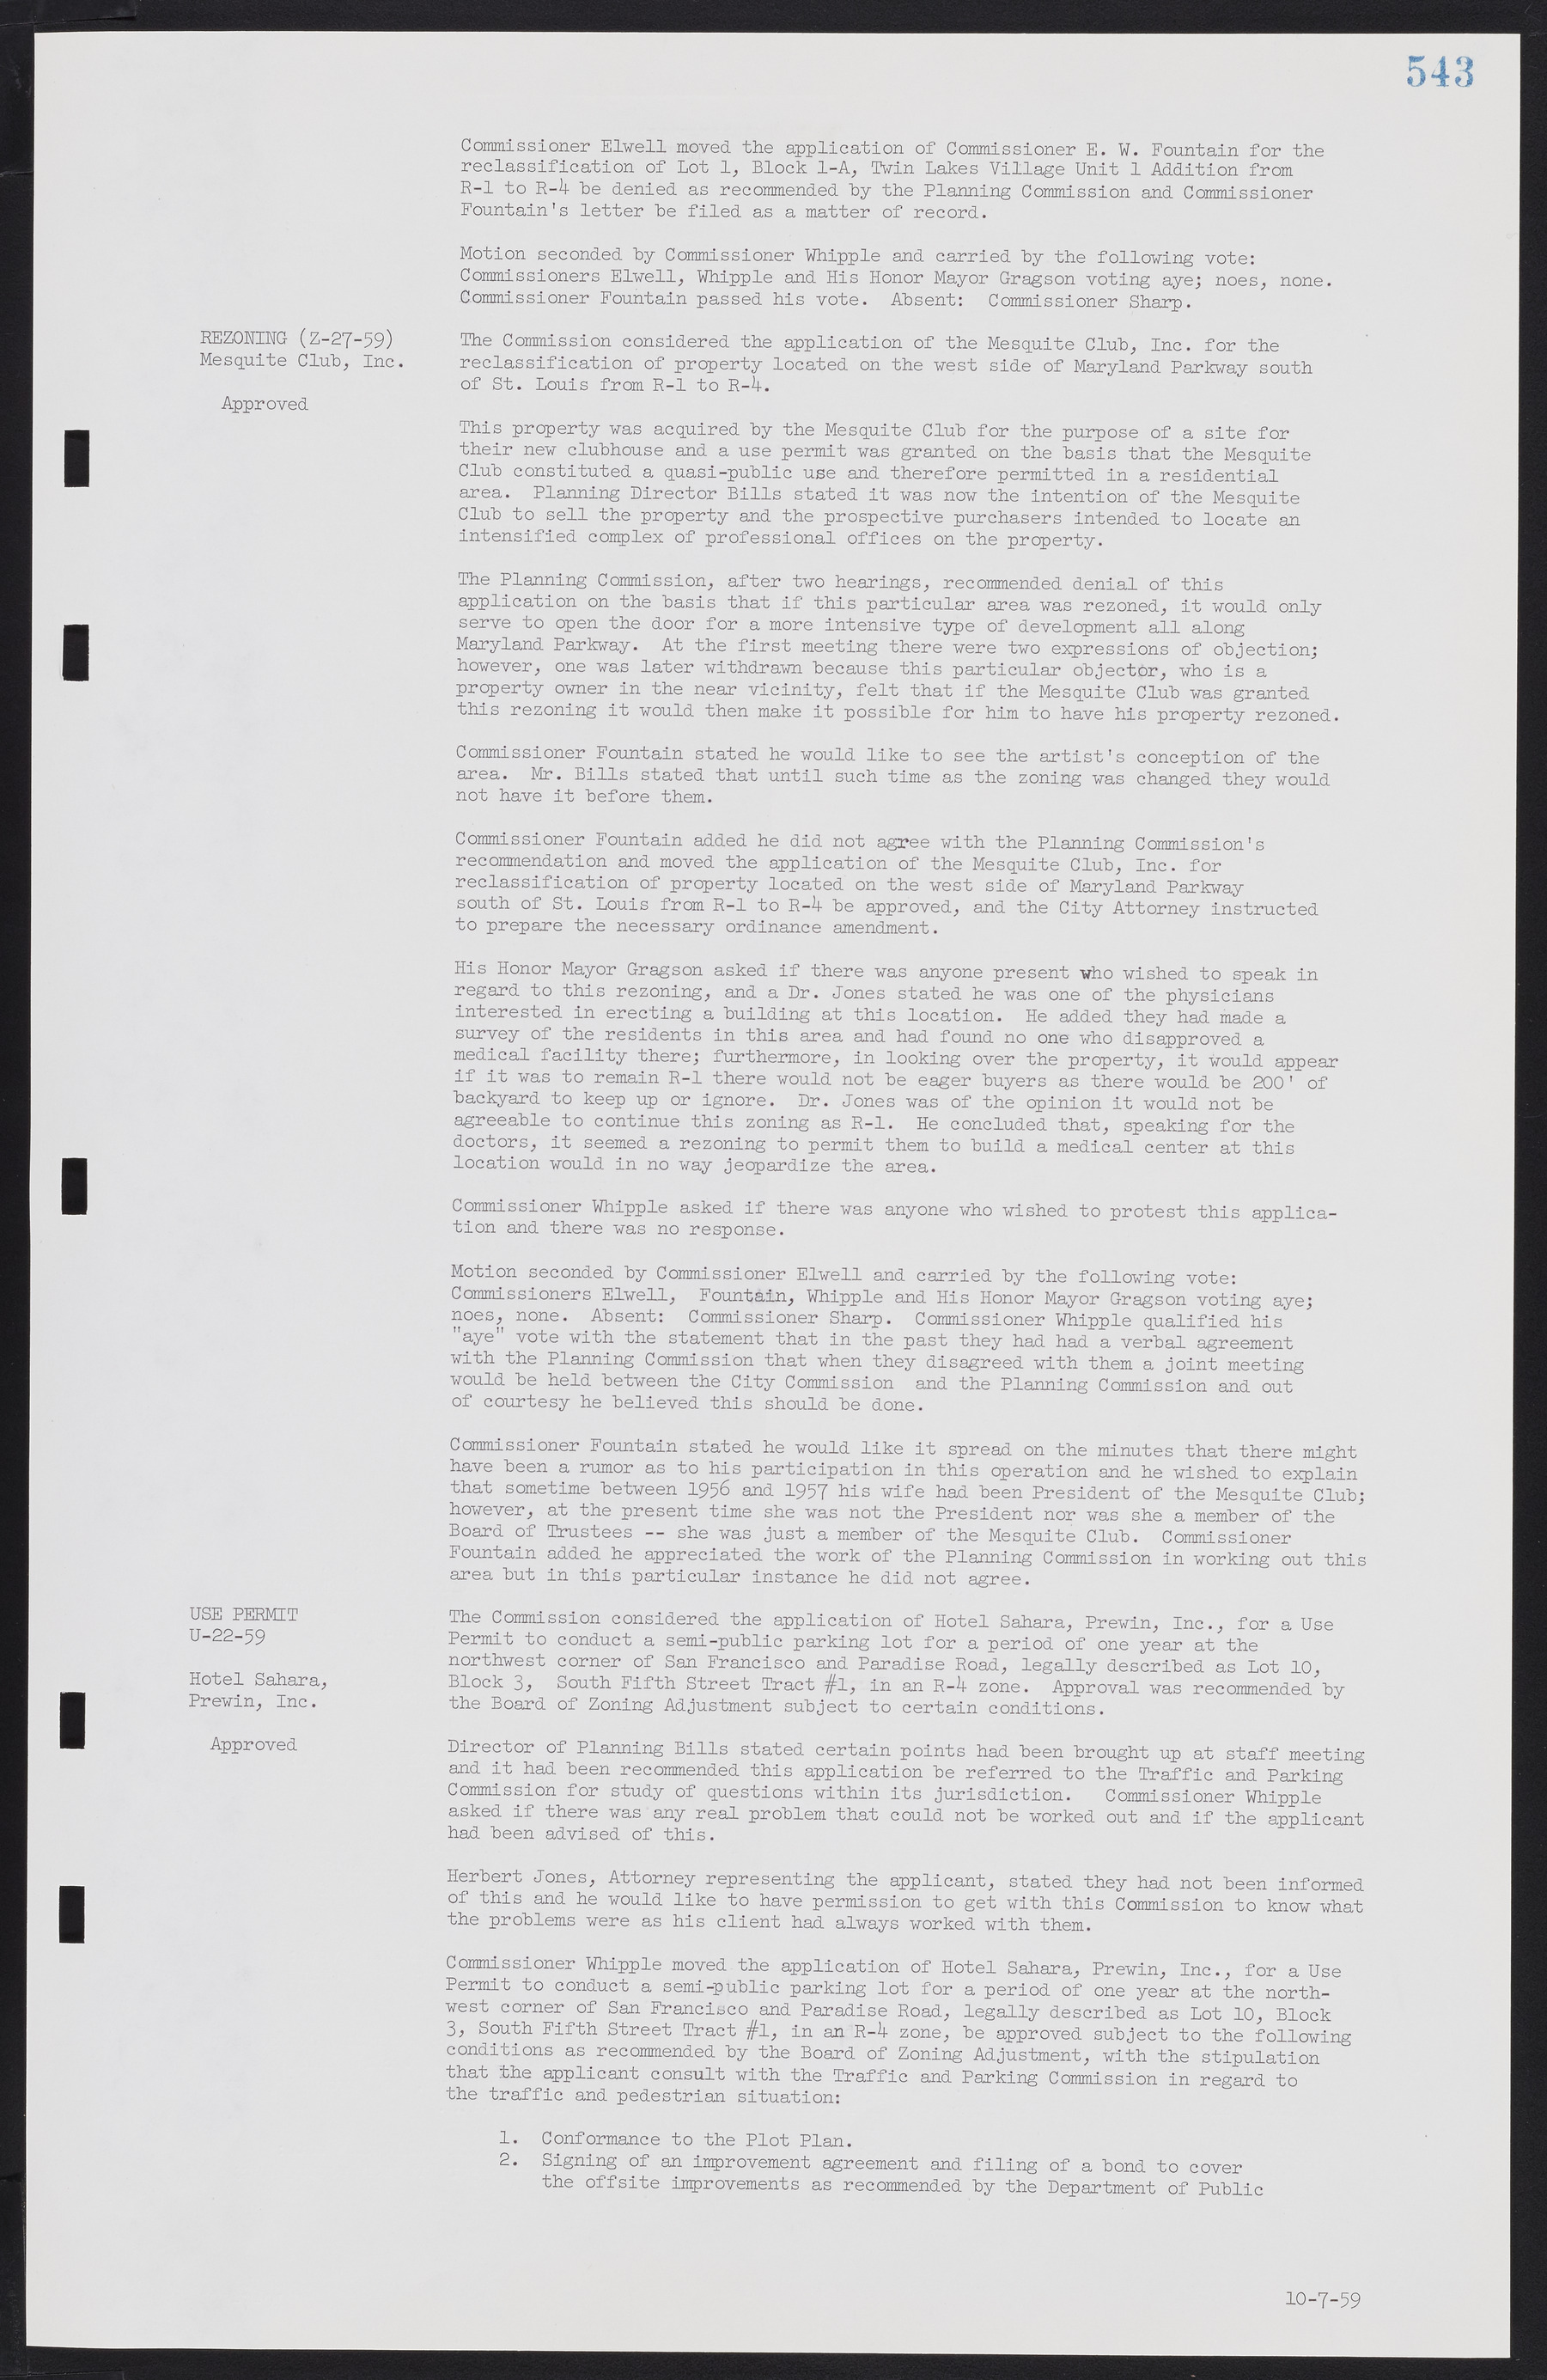 Las Vegas City Commission Minutes, November 20, 1957 to December 2, 1959, lvc000011-579